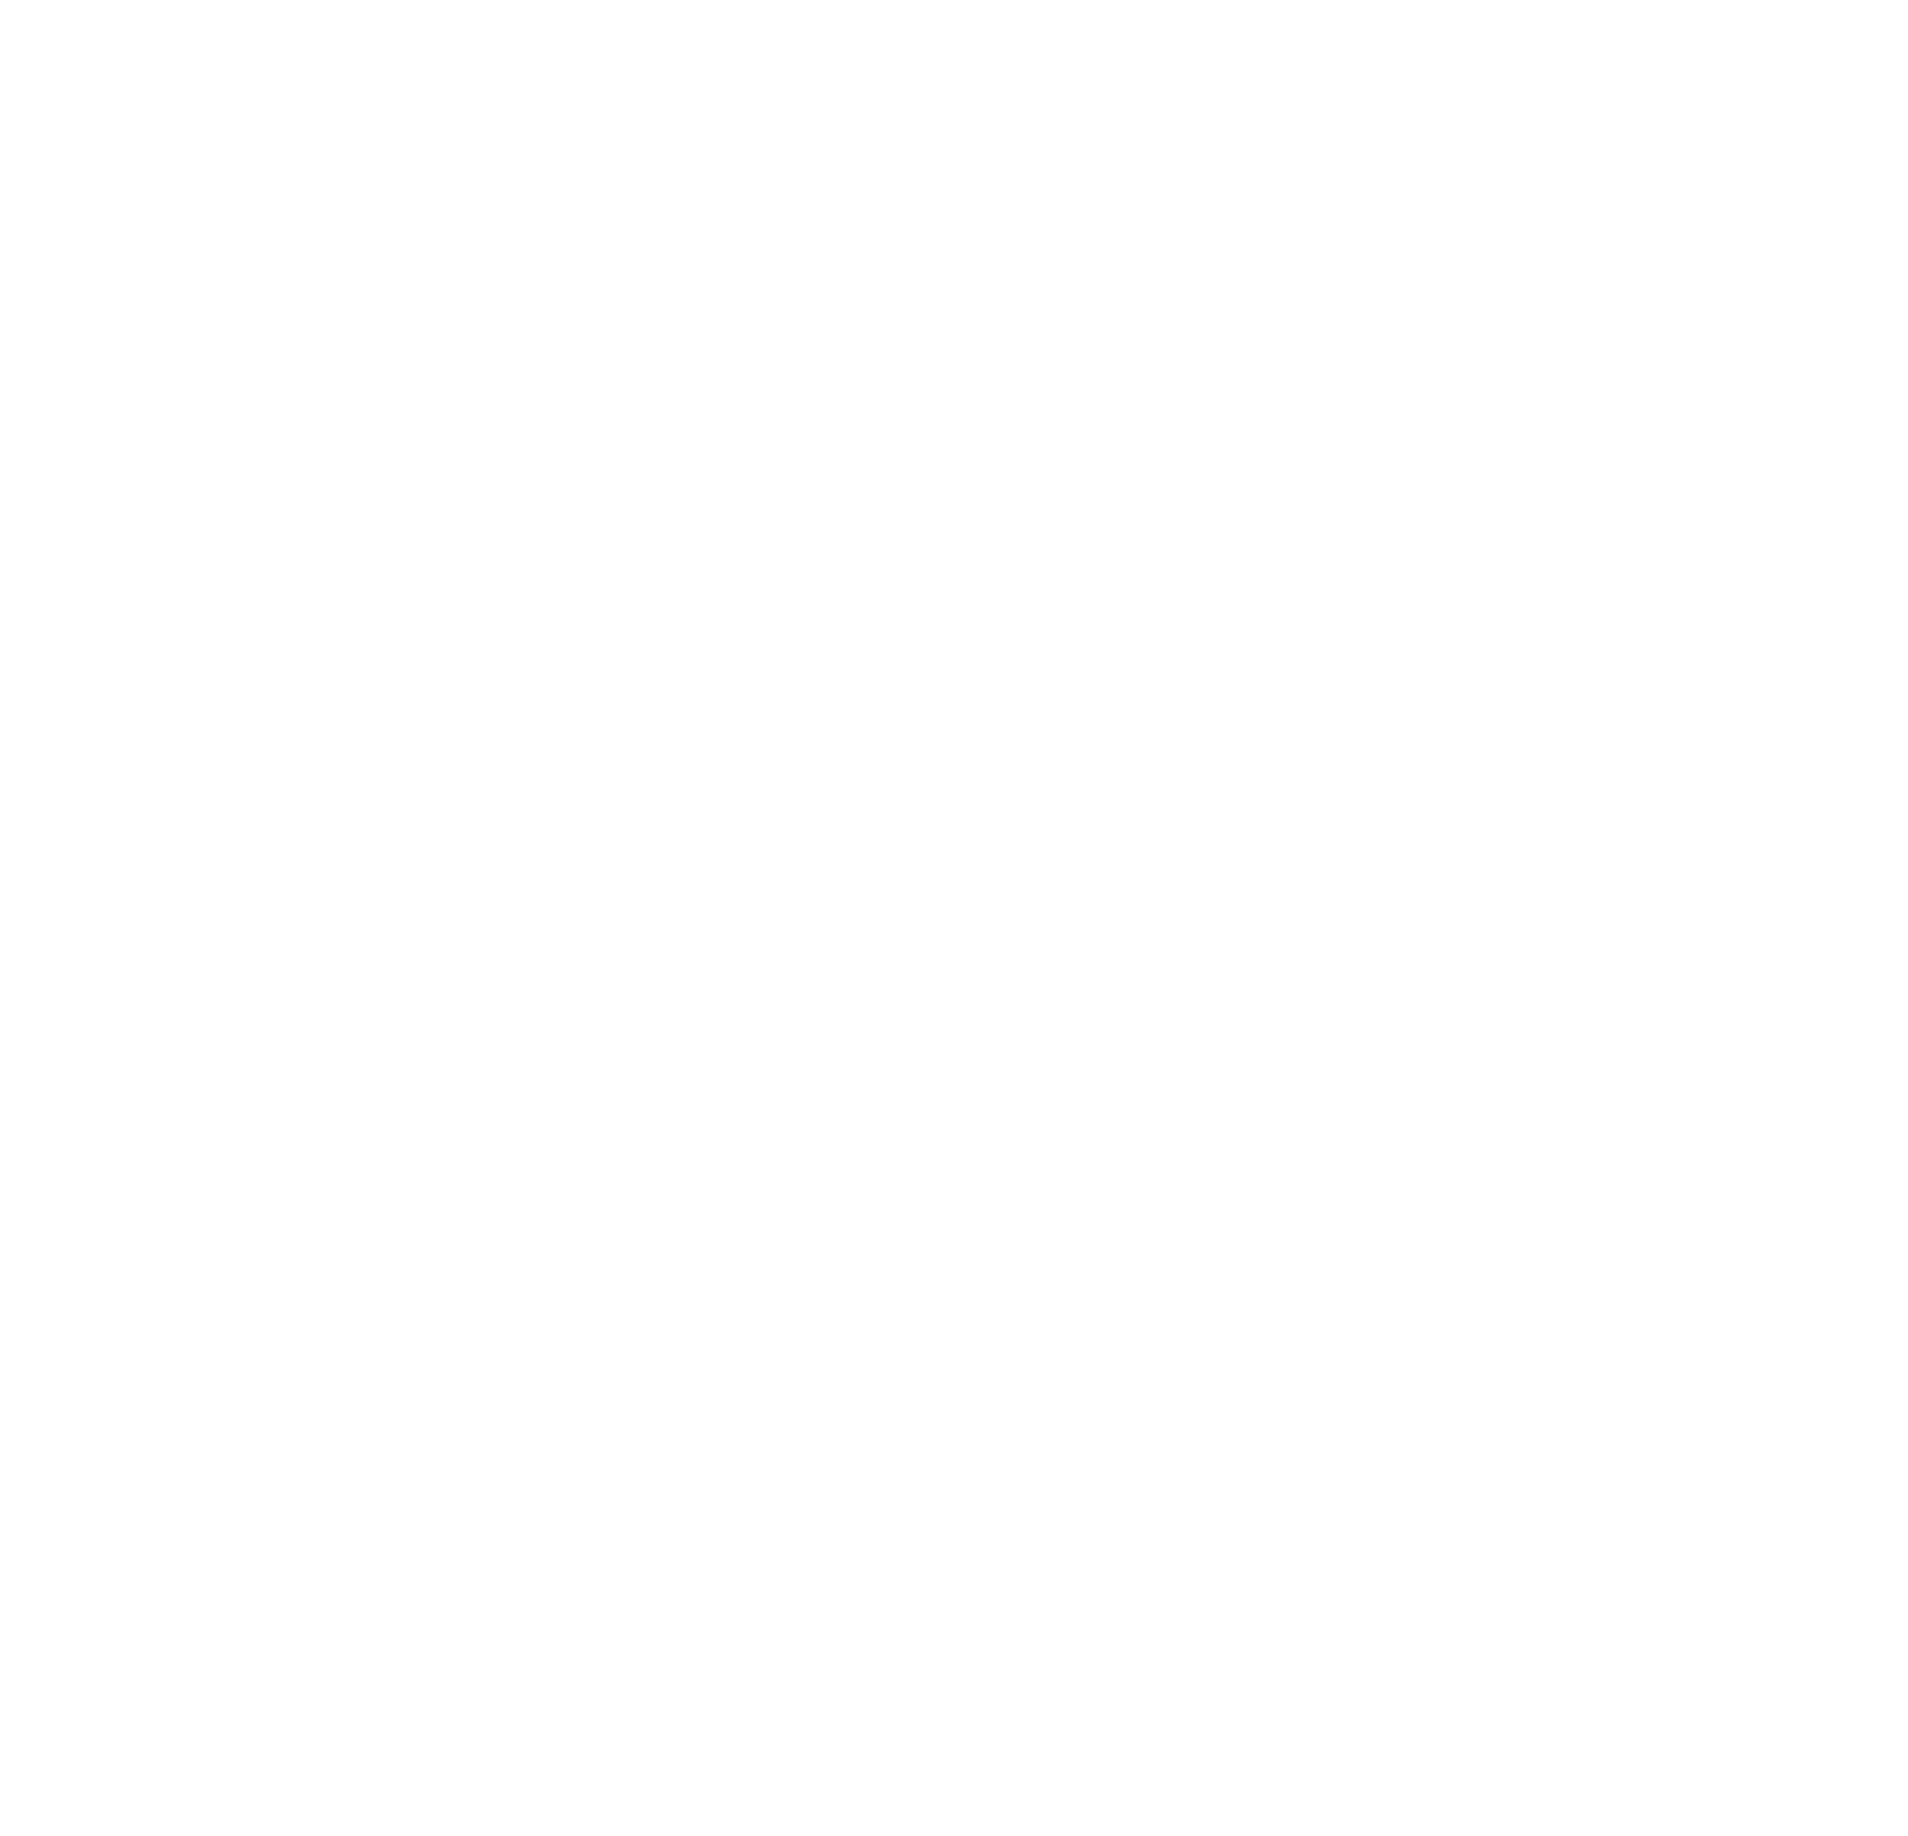 Foss Hollow Farms